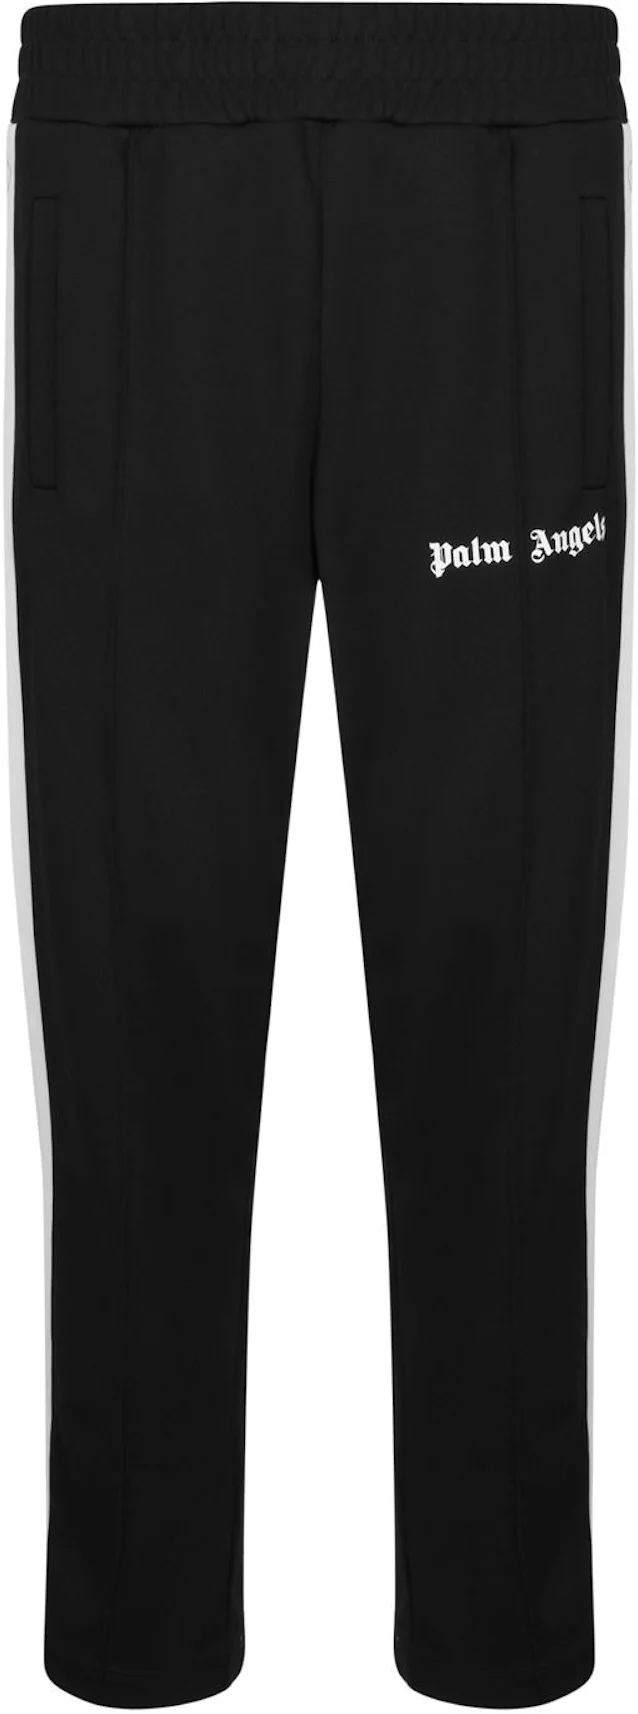 Palm Angels Palm Angels Classic Tracksuit Pants Black/white